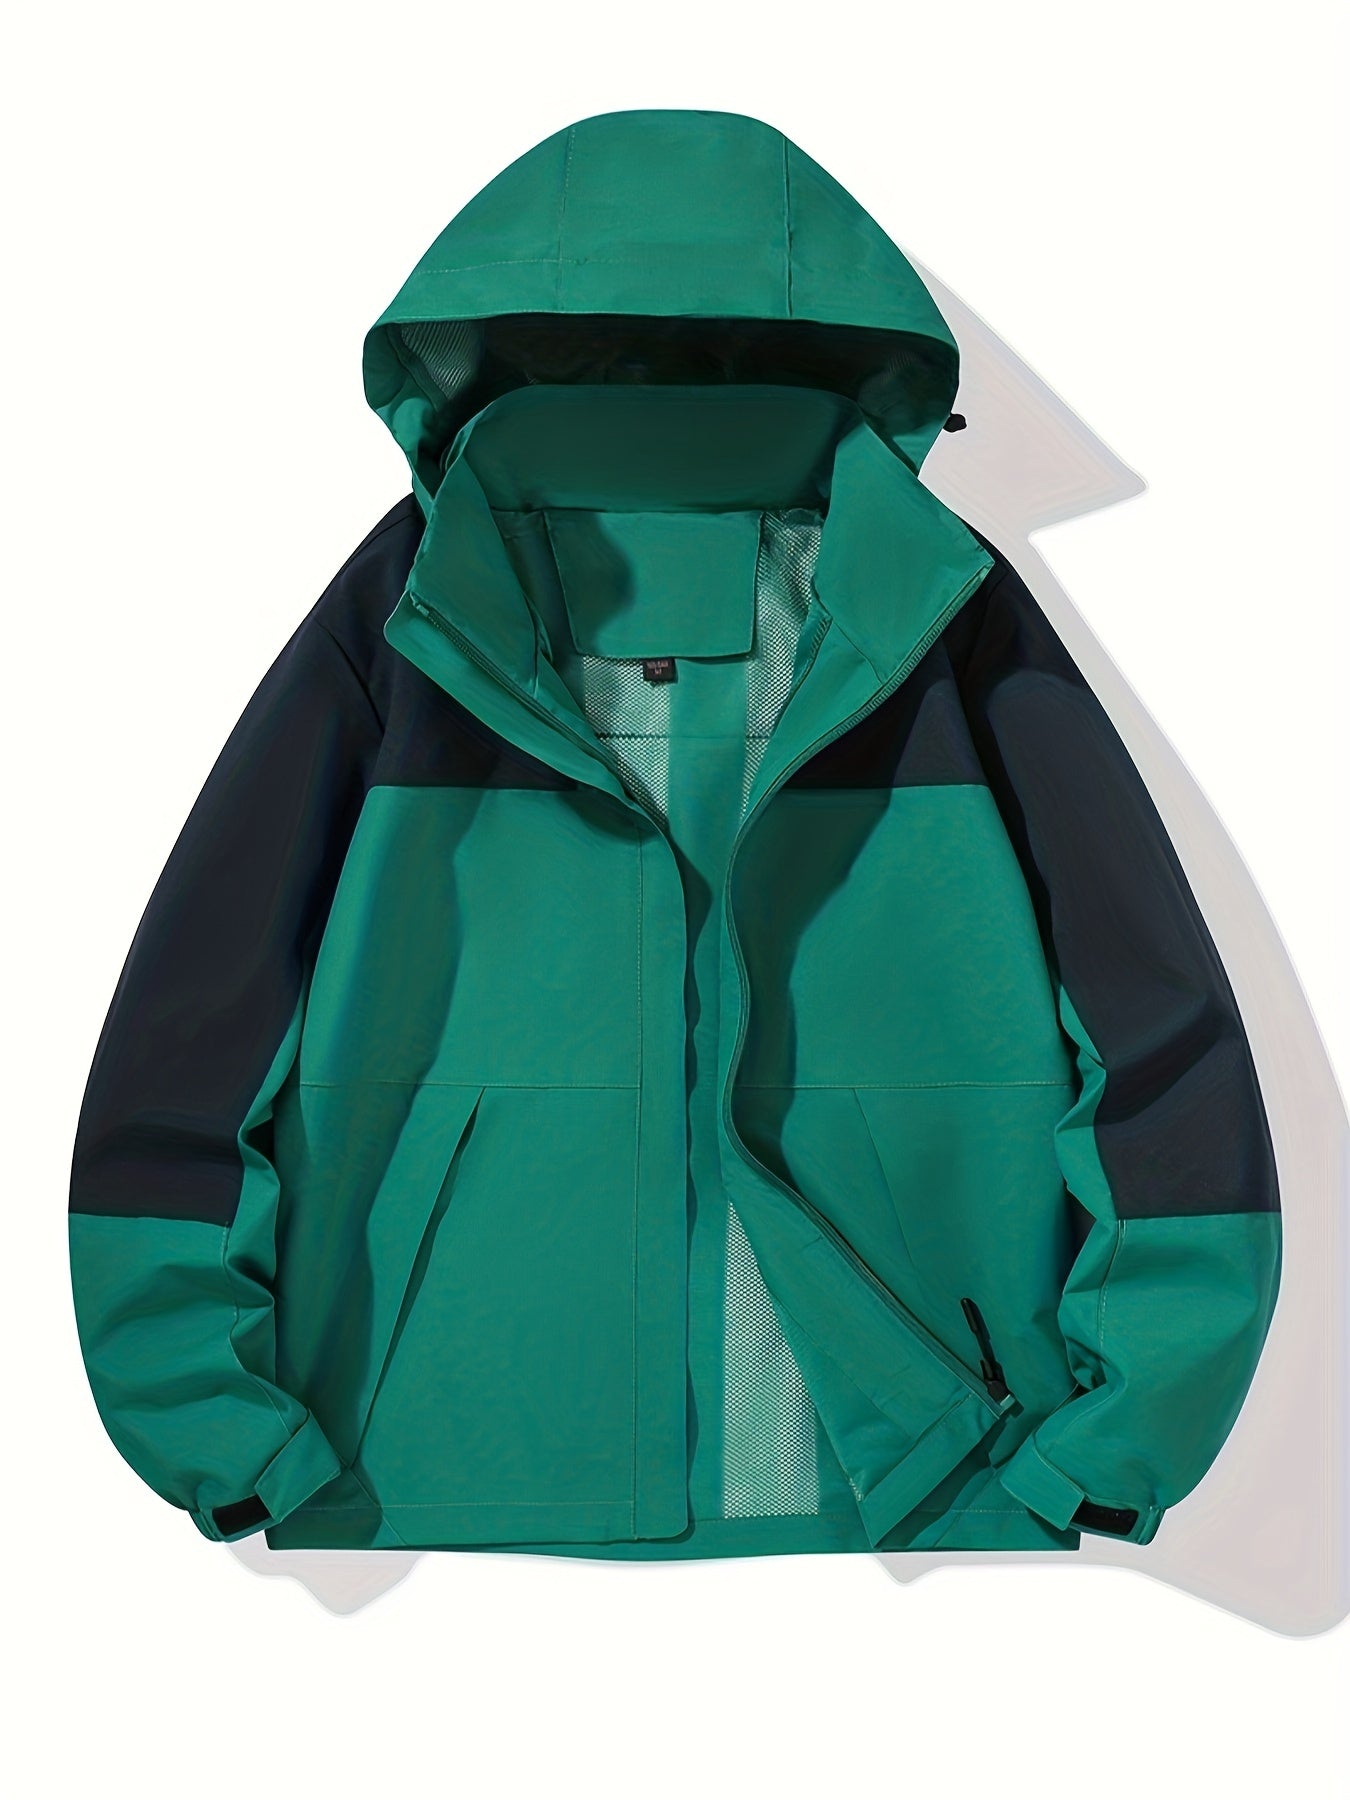 vlovelaw  Outdoor Sports Jacket With Detachable Hood, Women's Windproof And Rainproof Hiking Casual Sports Jacket, Women's Outdoor Clothing